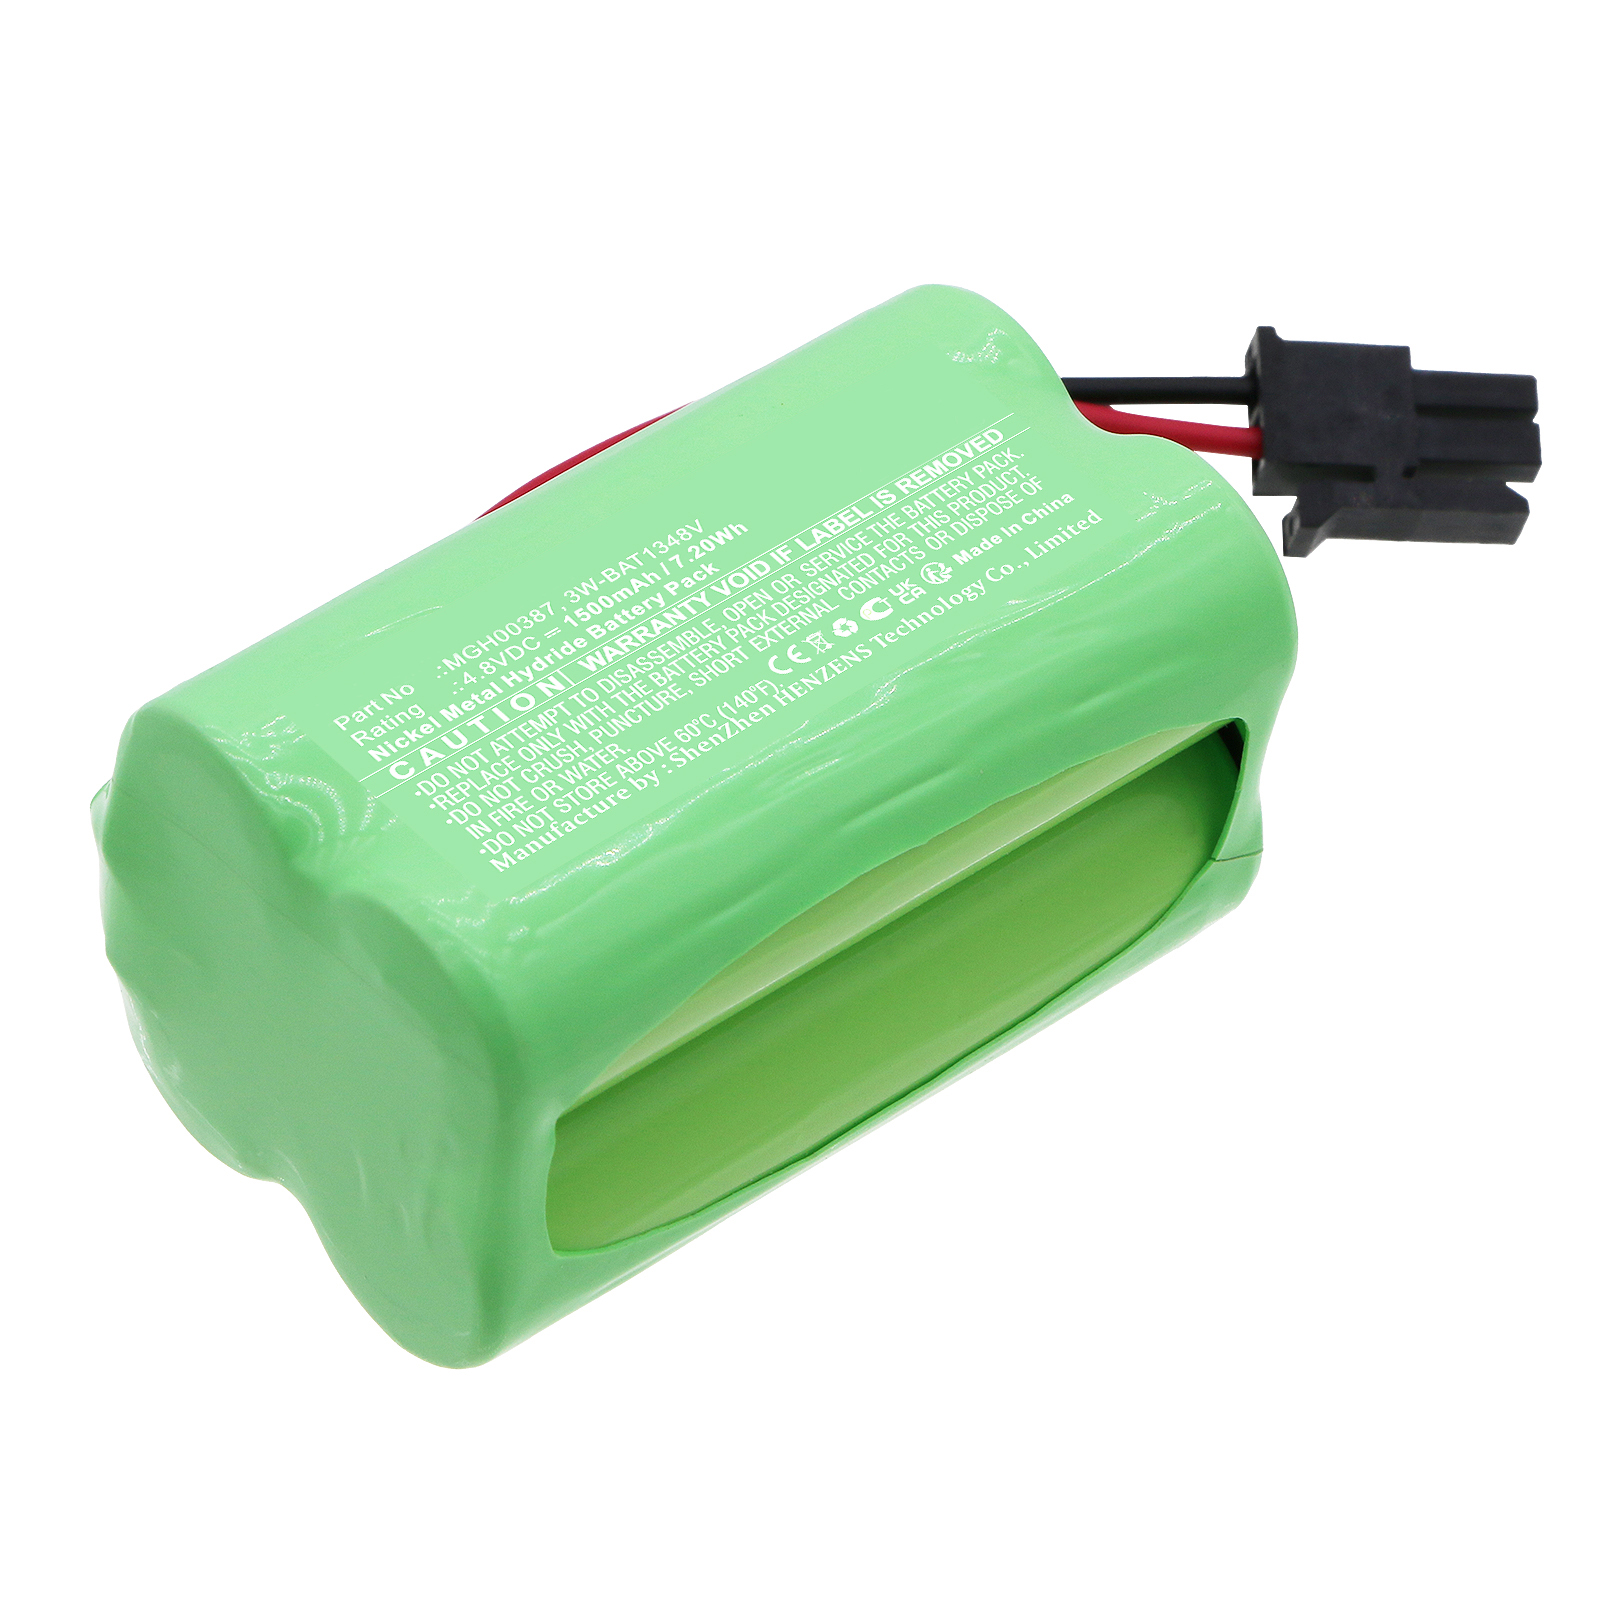 Synergy Digital Alarm System Battery, Compatible with DSC 3W-BAT1348V Alarm System Battery (Ni-MH, 4.8V, 1500mAh)